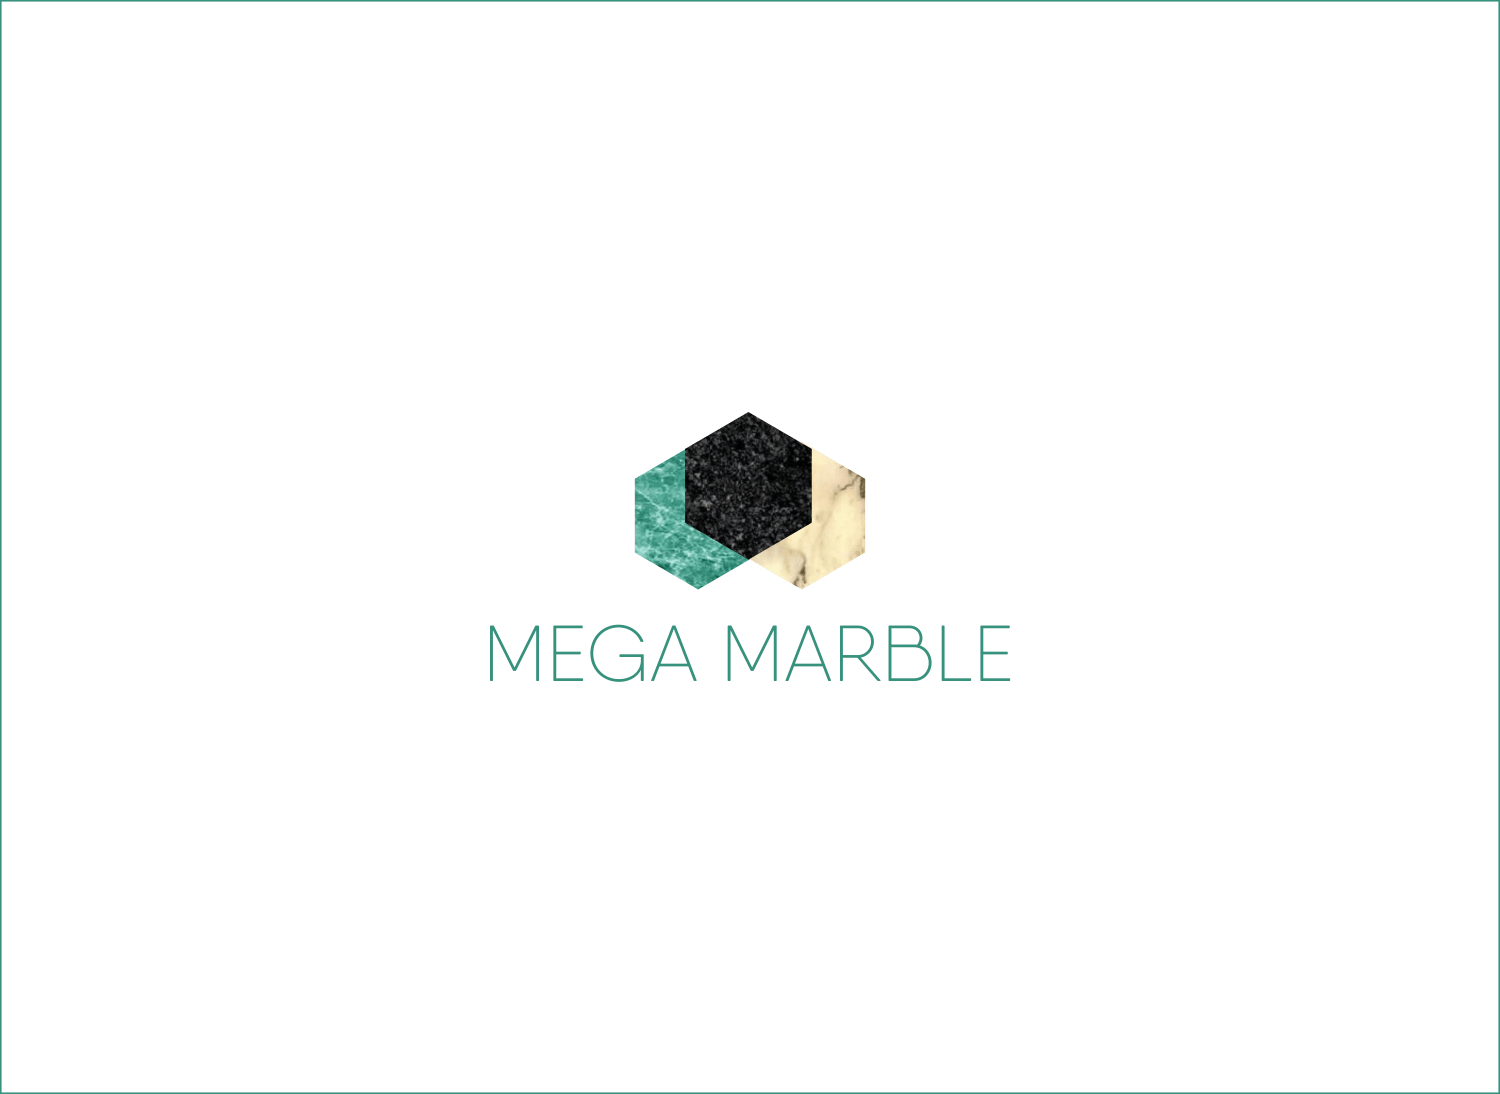 Marble Logo - Professional, Modern, Construction Logo Design for Mega Marble